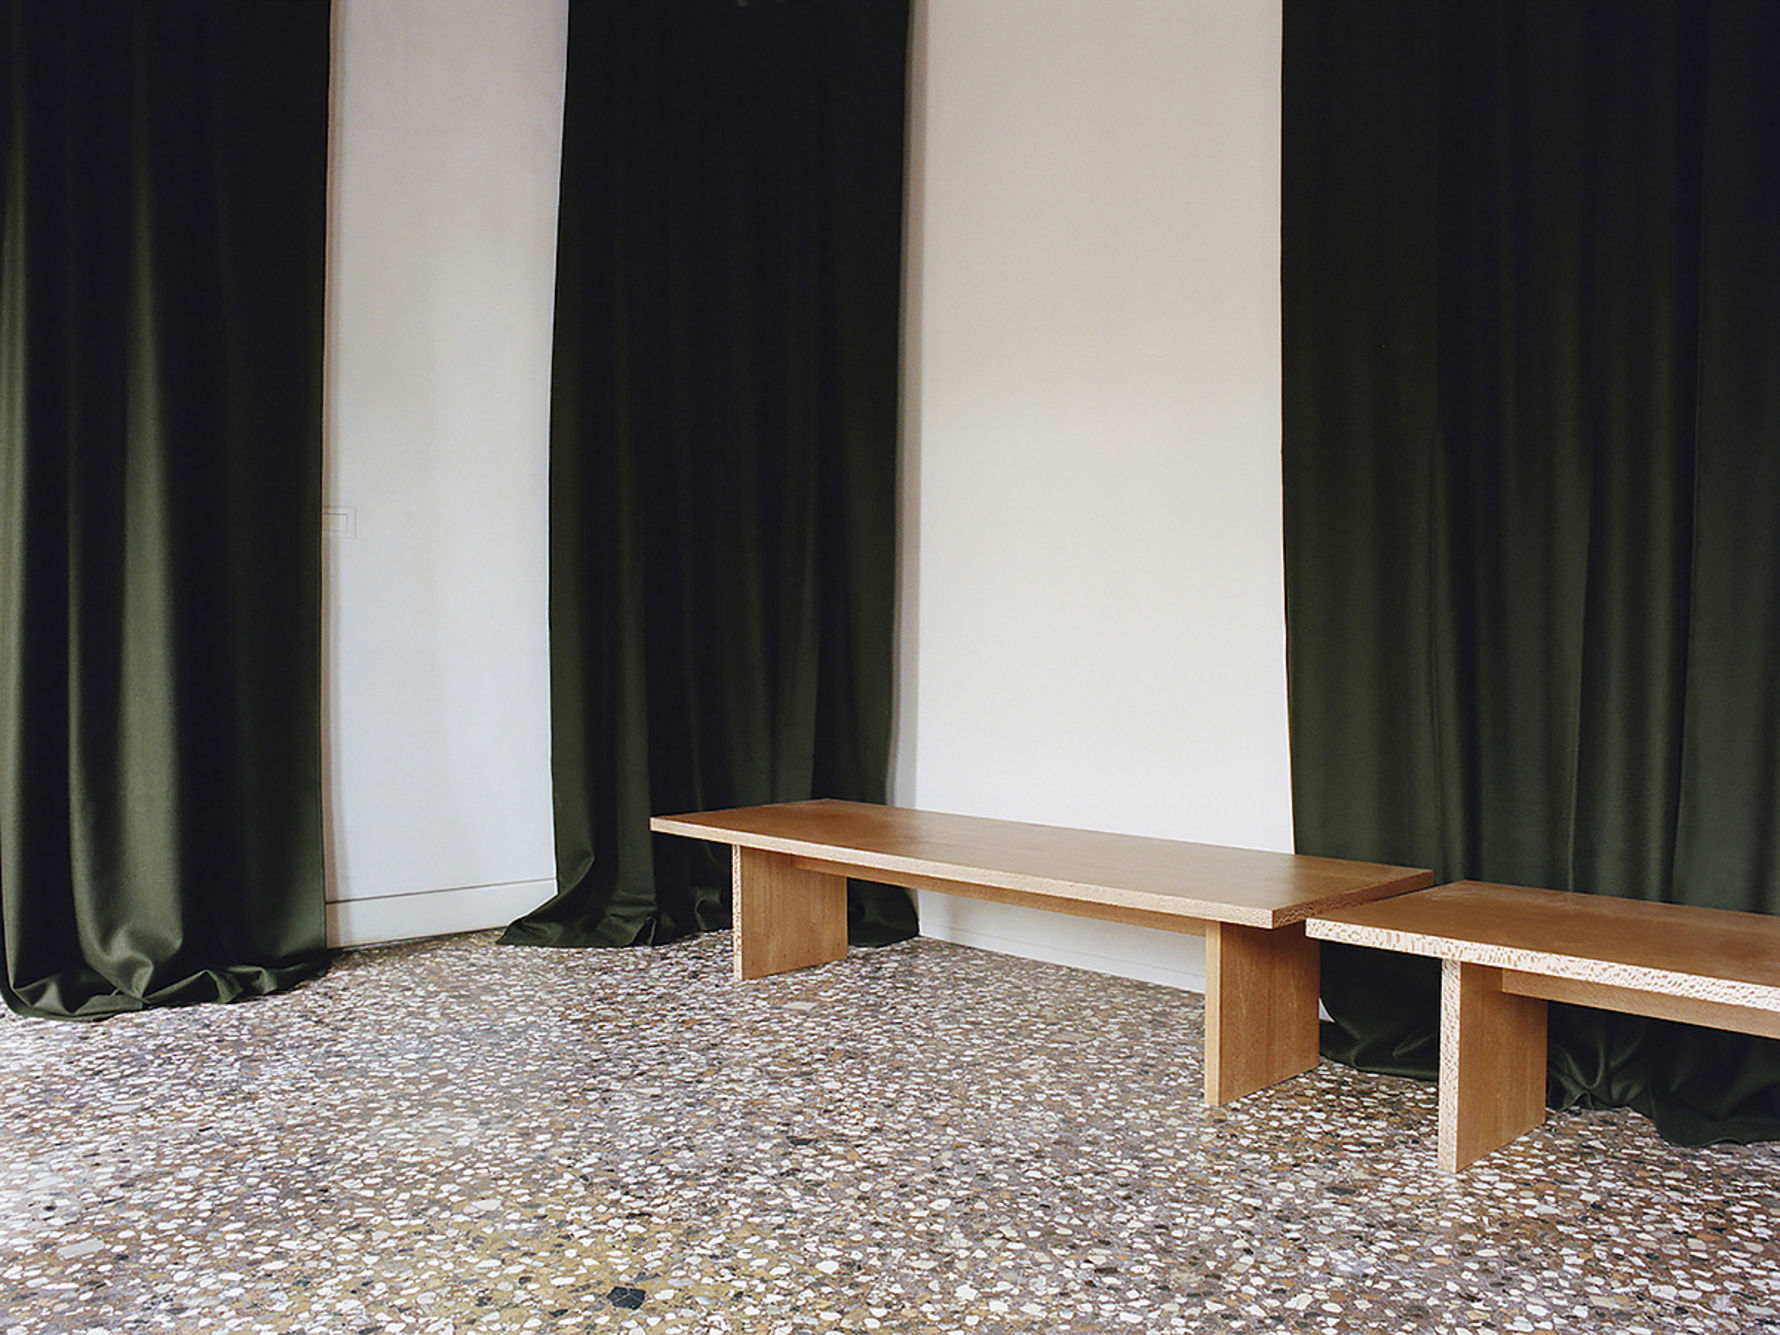 Te Koha • The New Zealand Room - La Biennale di Venezia | Mary Gaudin